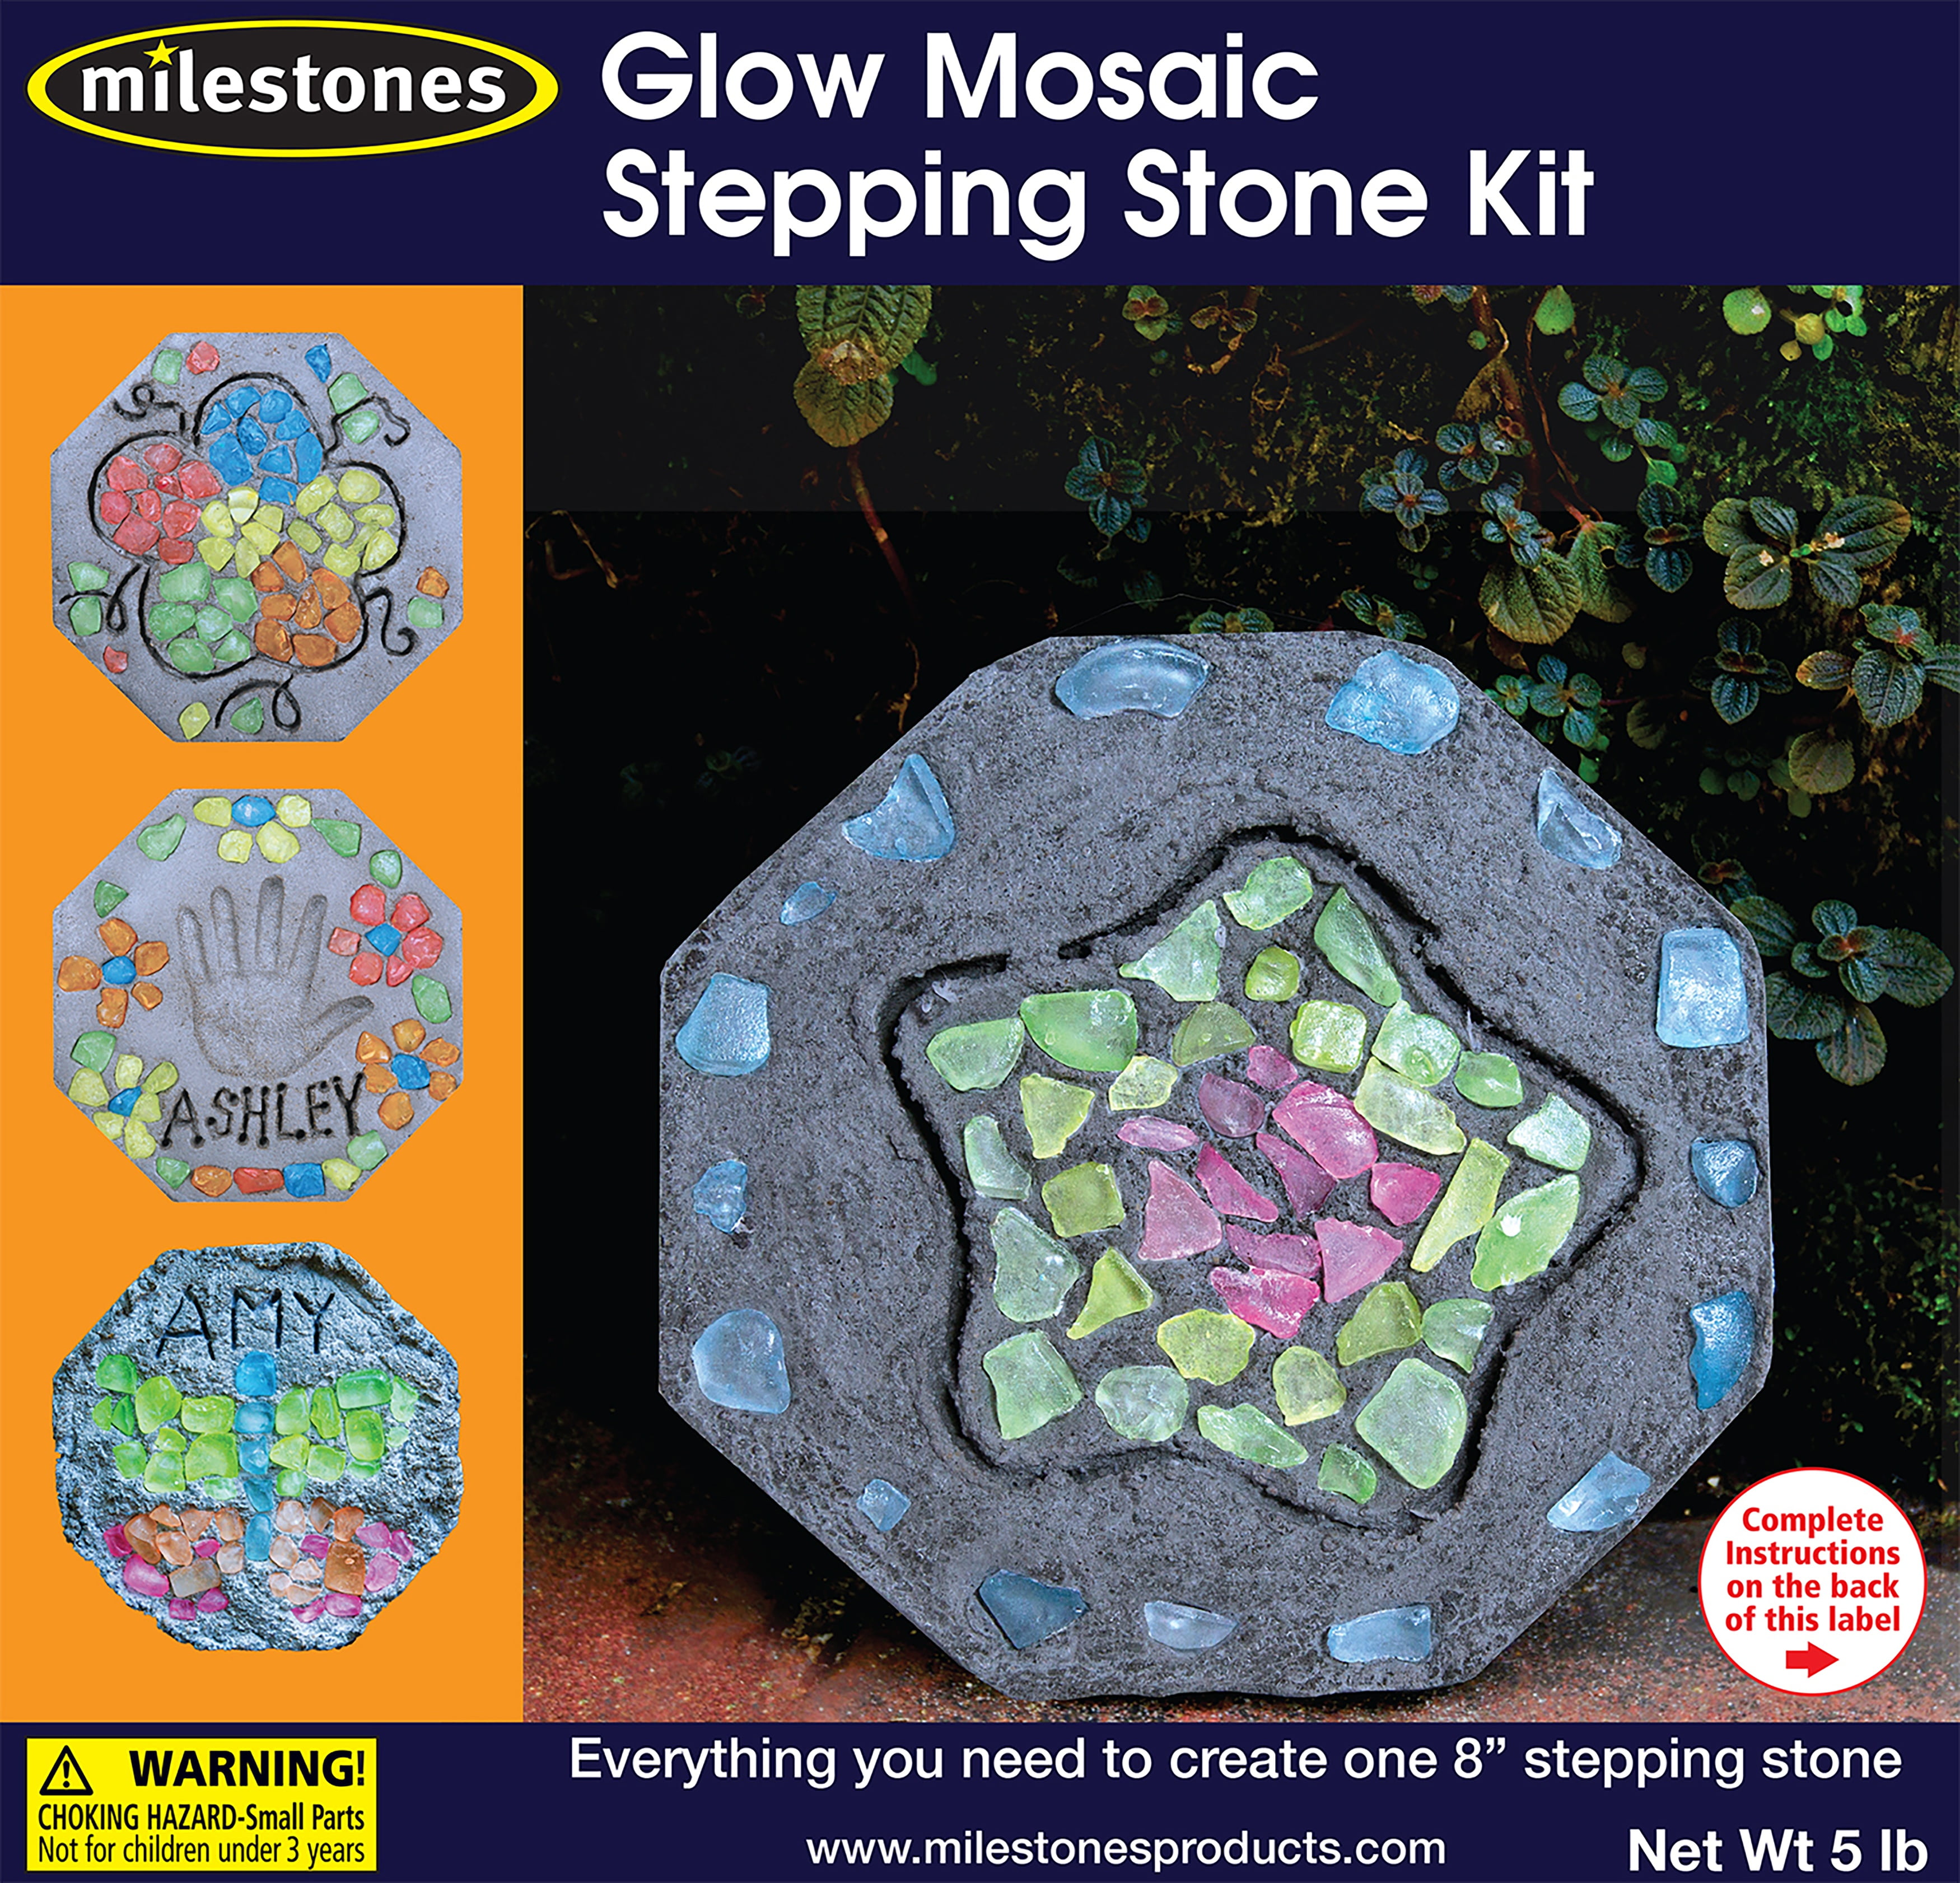 Mosaic Mercantile Mosaic Starry Night Stepping Stone Kit